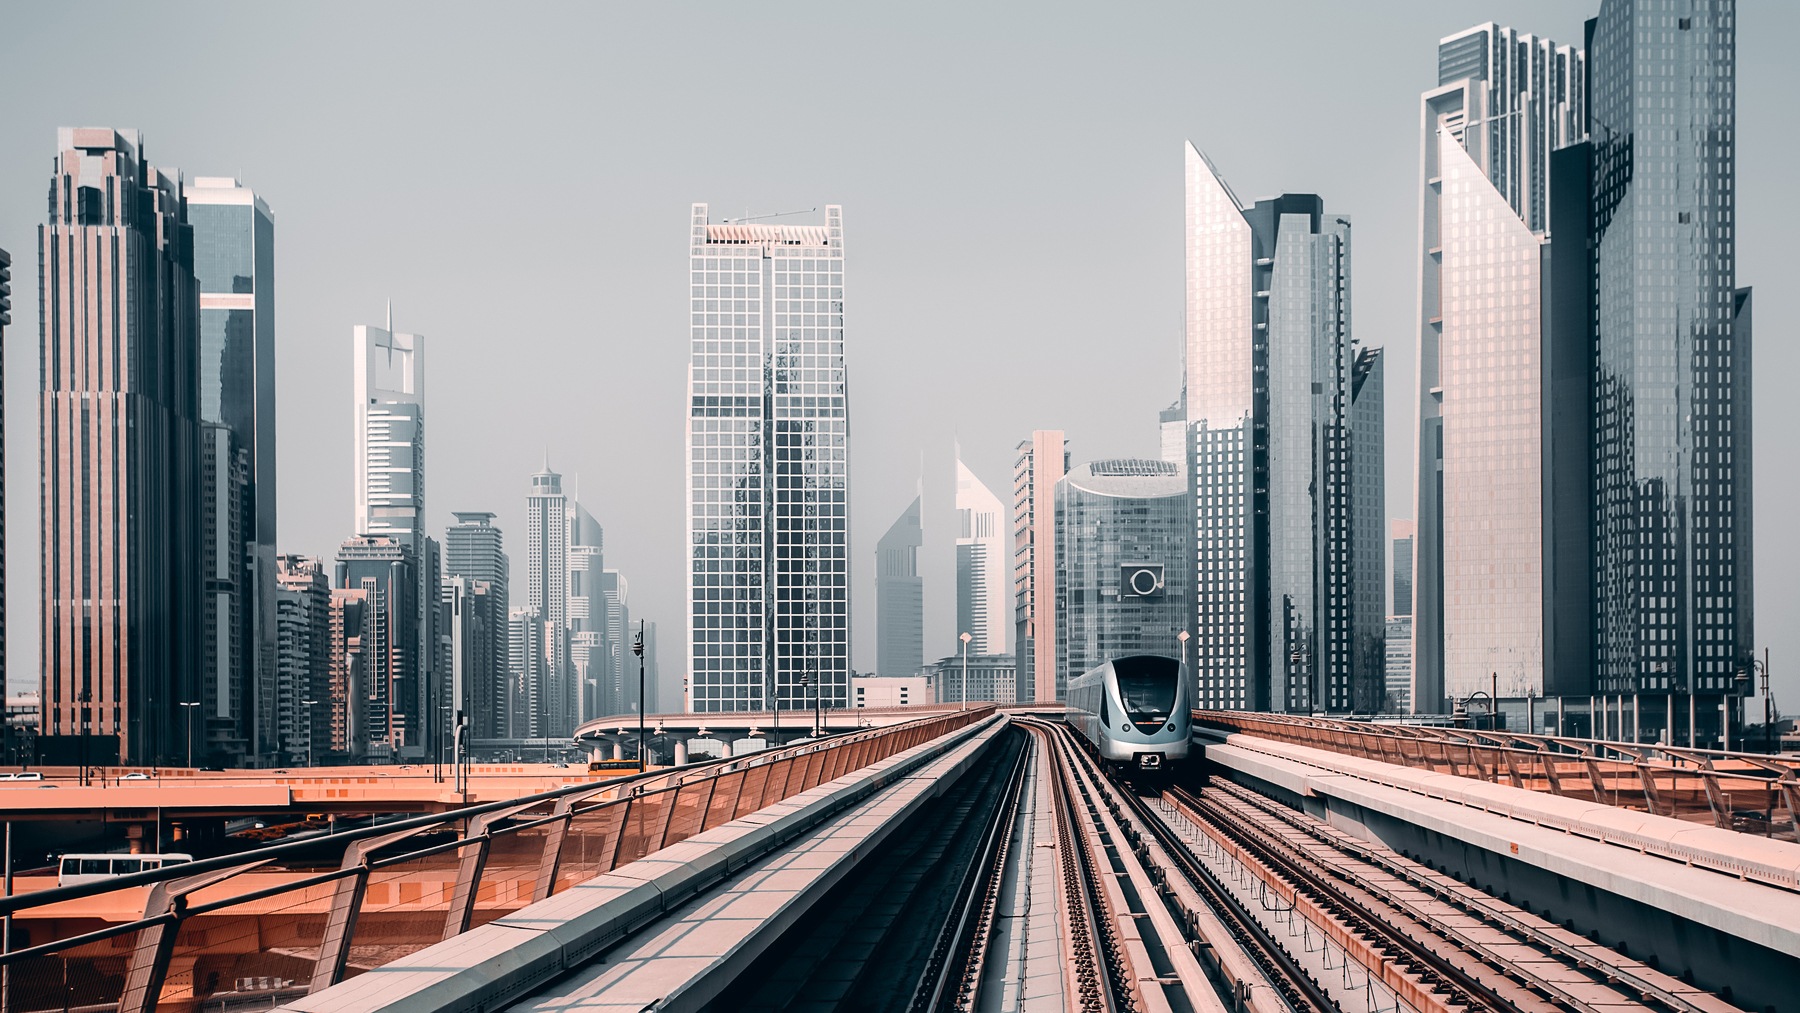 General 1800x1013 Dubai cityscape city building train railway photography